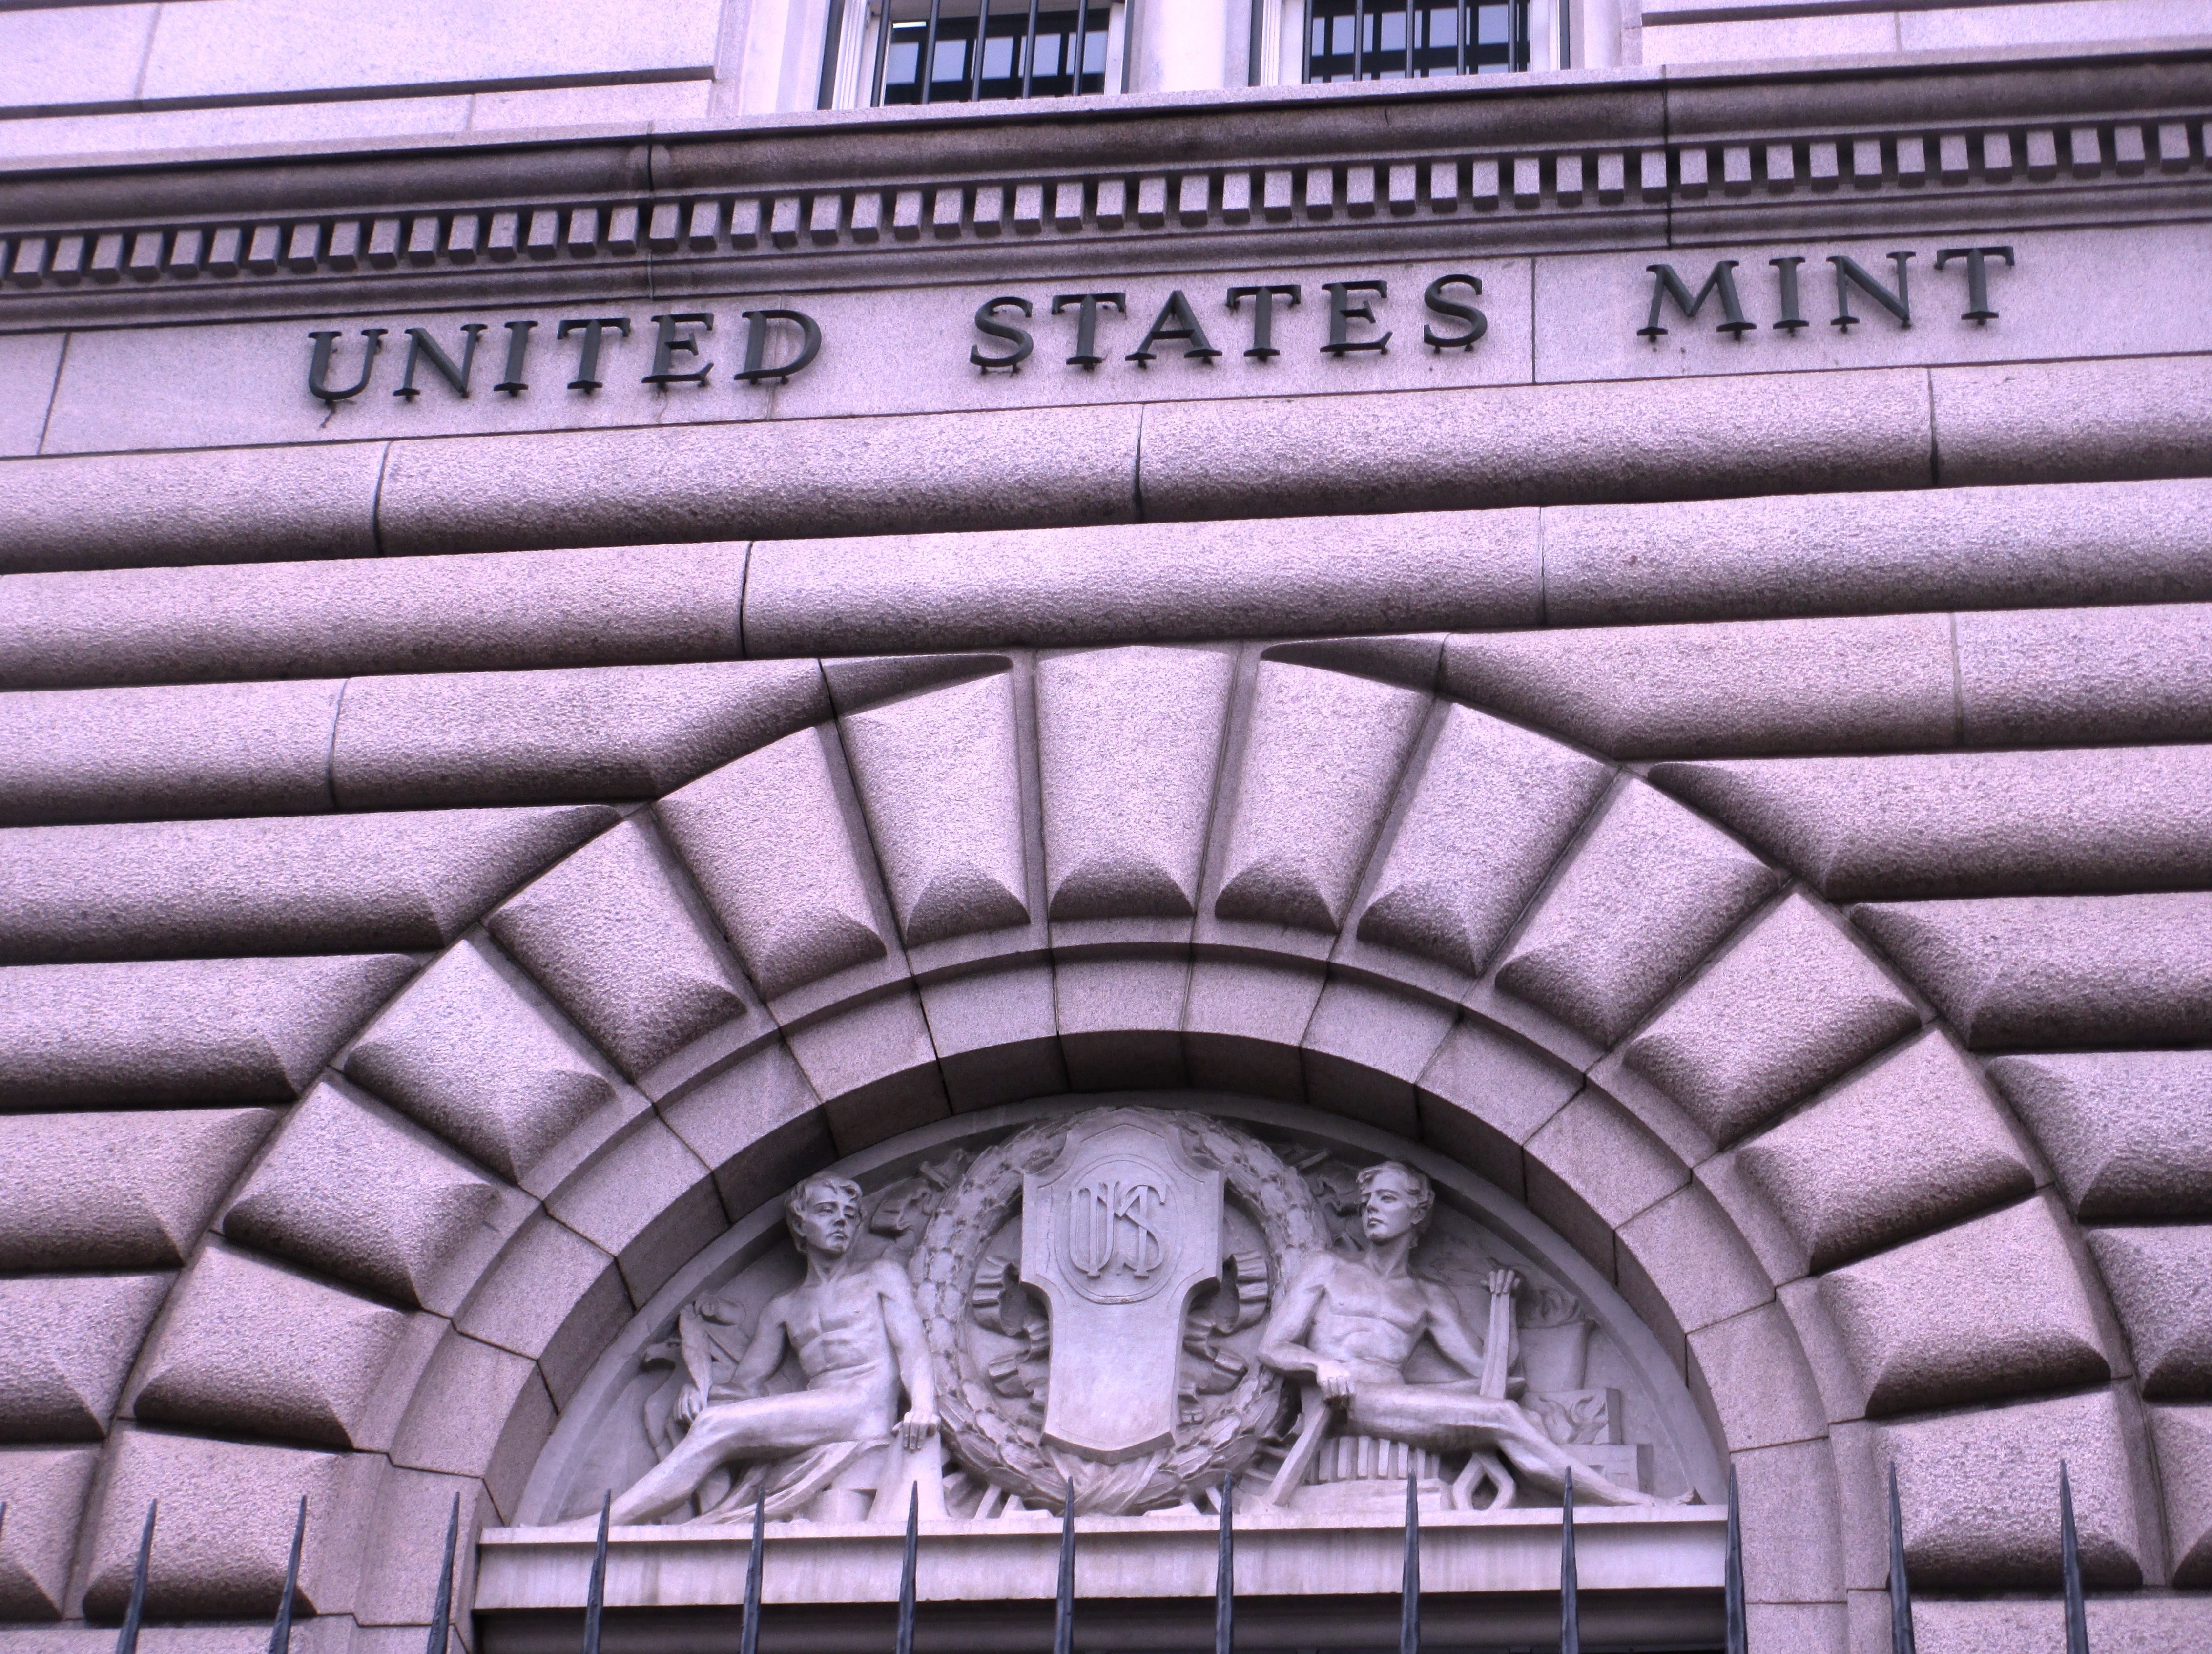 united states mint